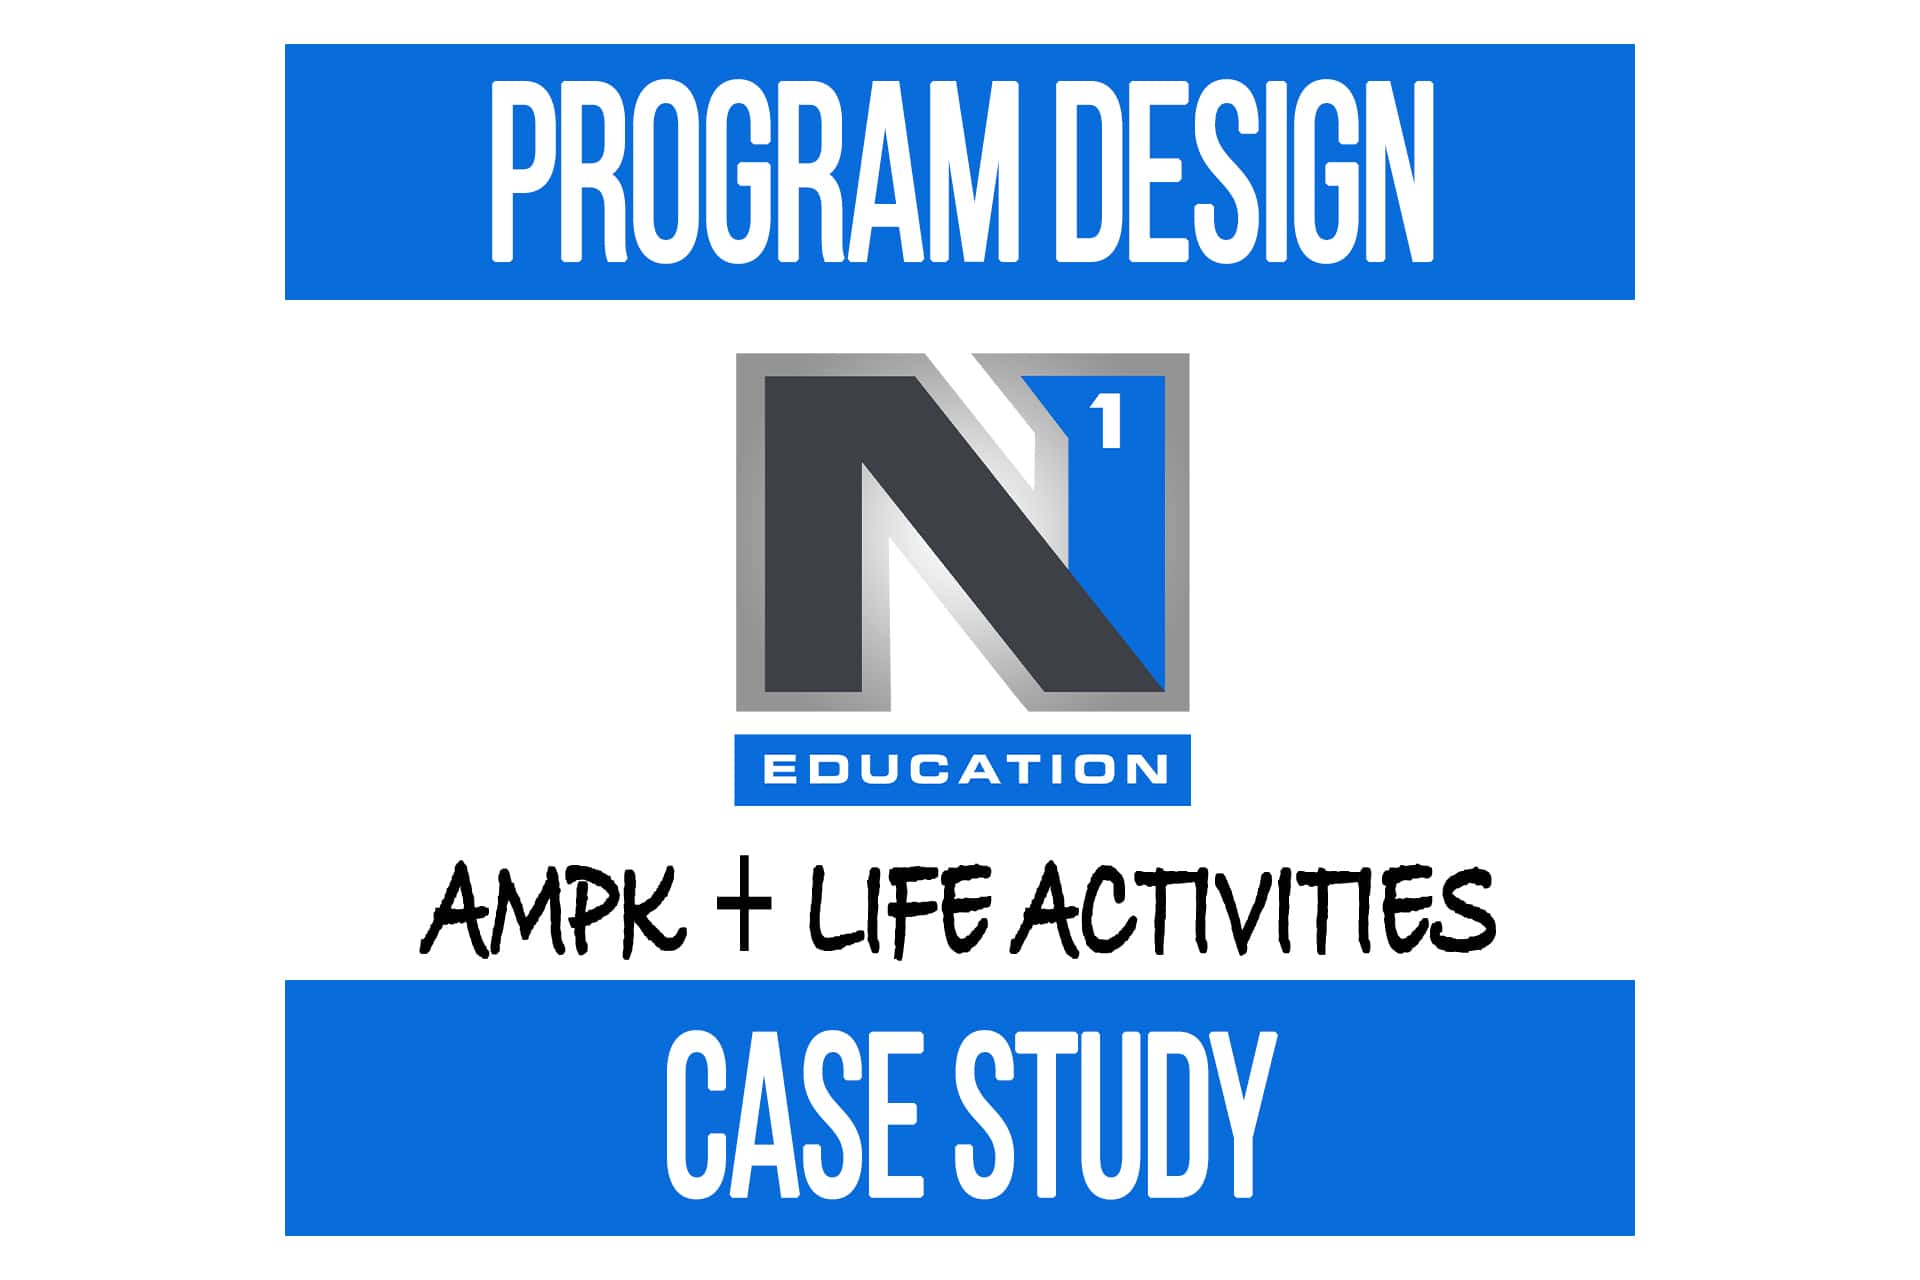 Program Design Case Study: AMPK + Life Activities